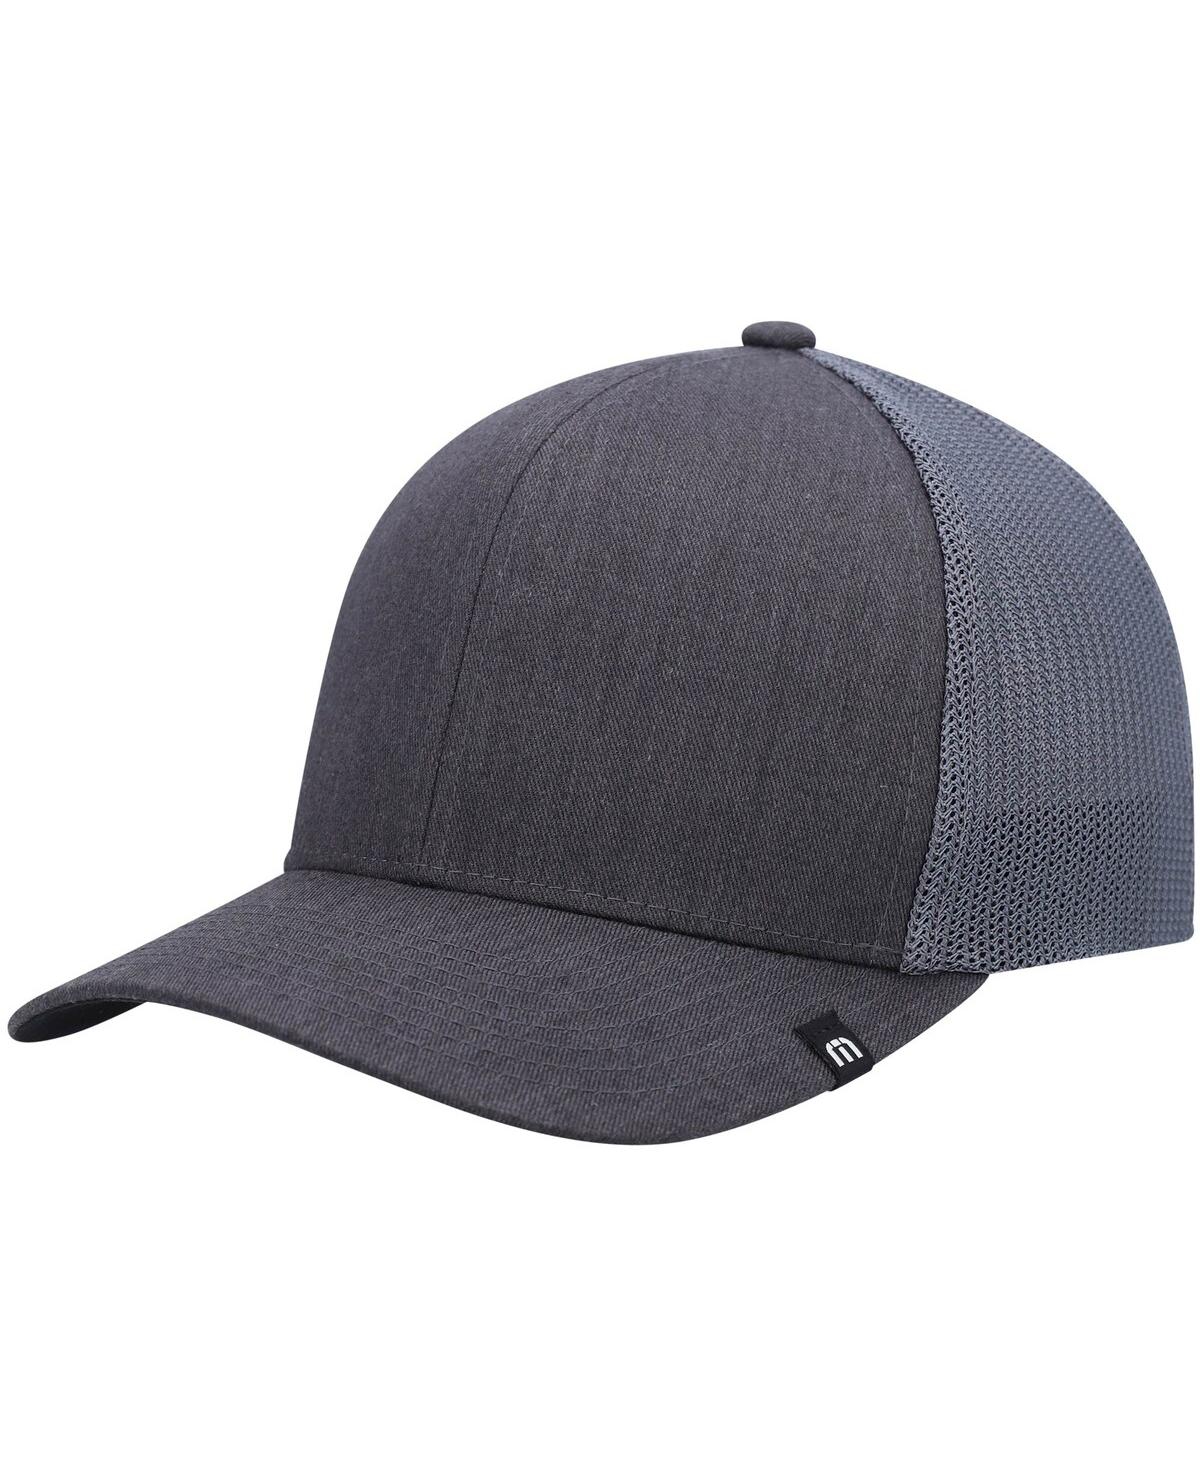 Travis Mathew Men's Travismathew Heathered Charcoal Widder 2.0 Trucker Snapback Hat